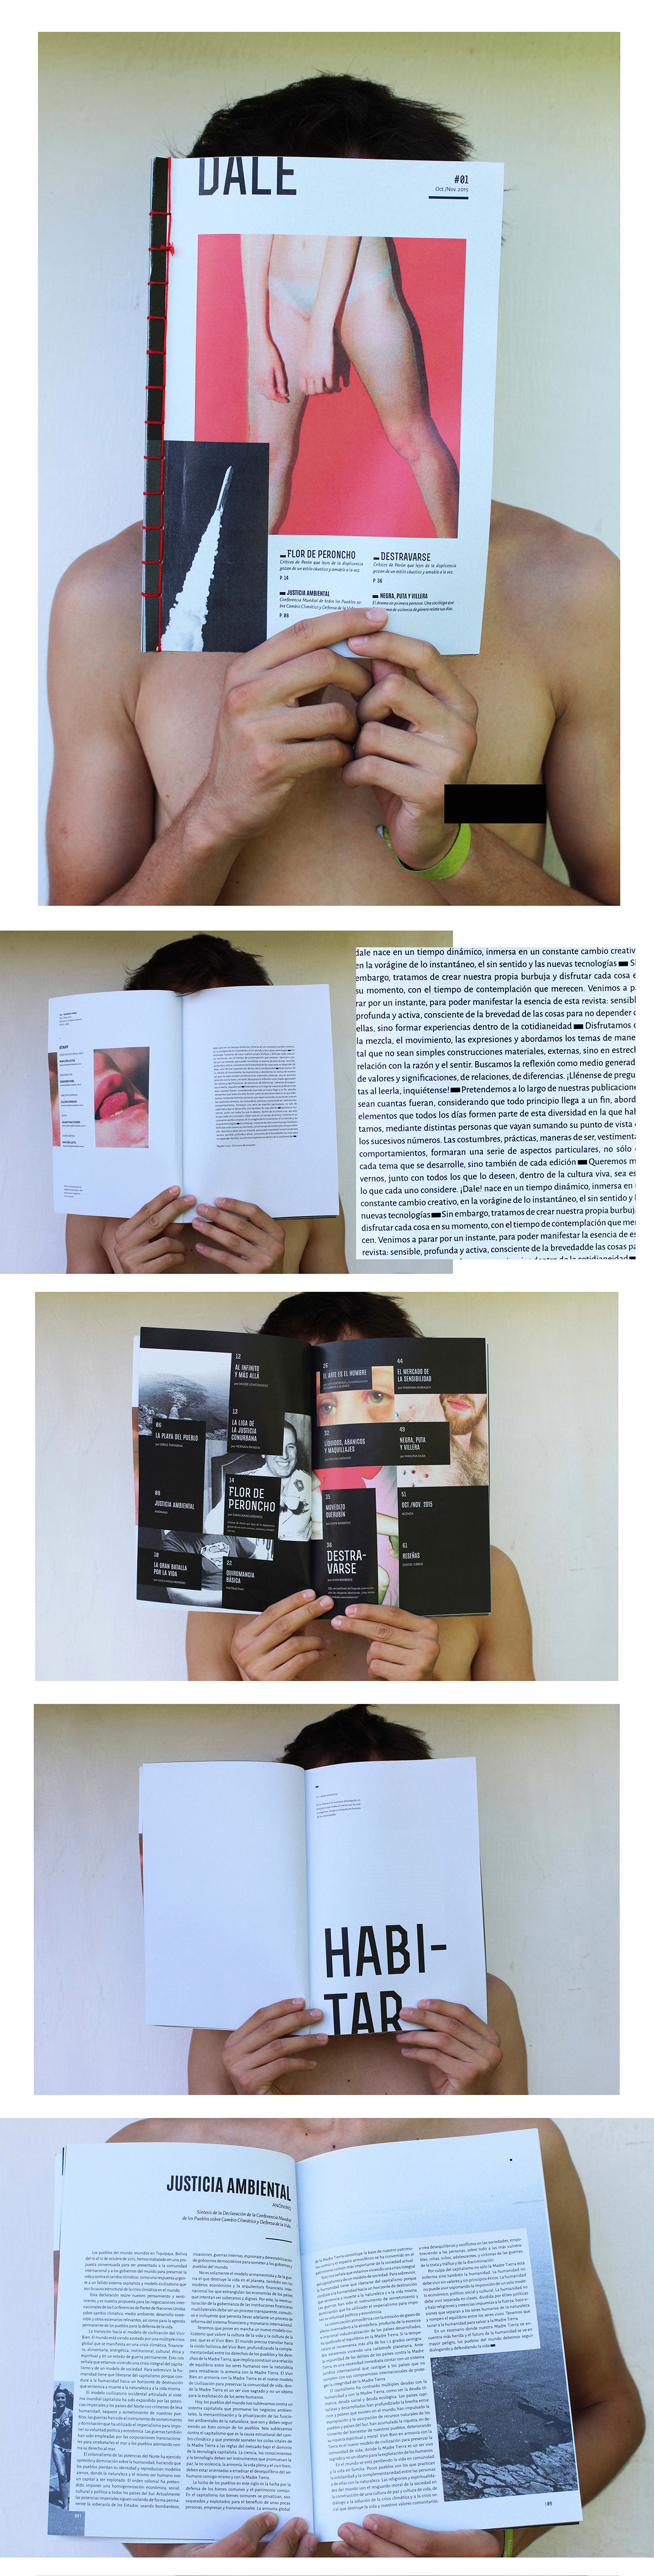 dale magazine revista cultural fadu uba DG diseñografico graphicdesign editorial editorialdesign typo culturalmagazine manela diseñoeditorial